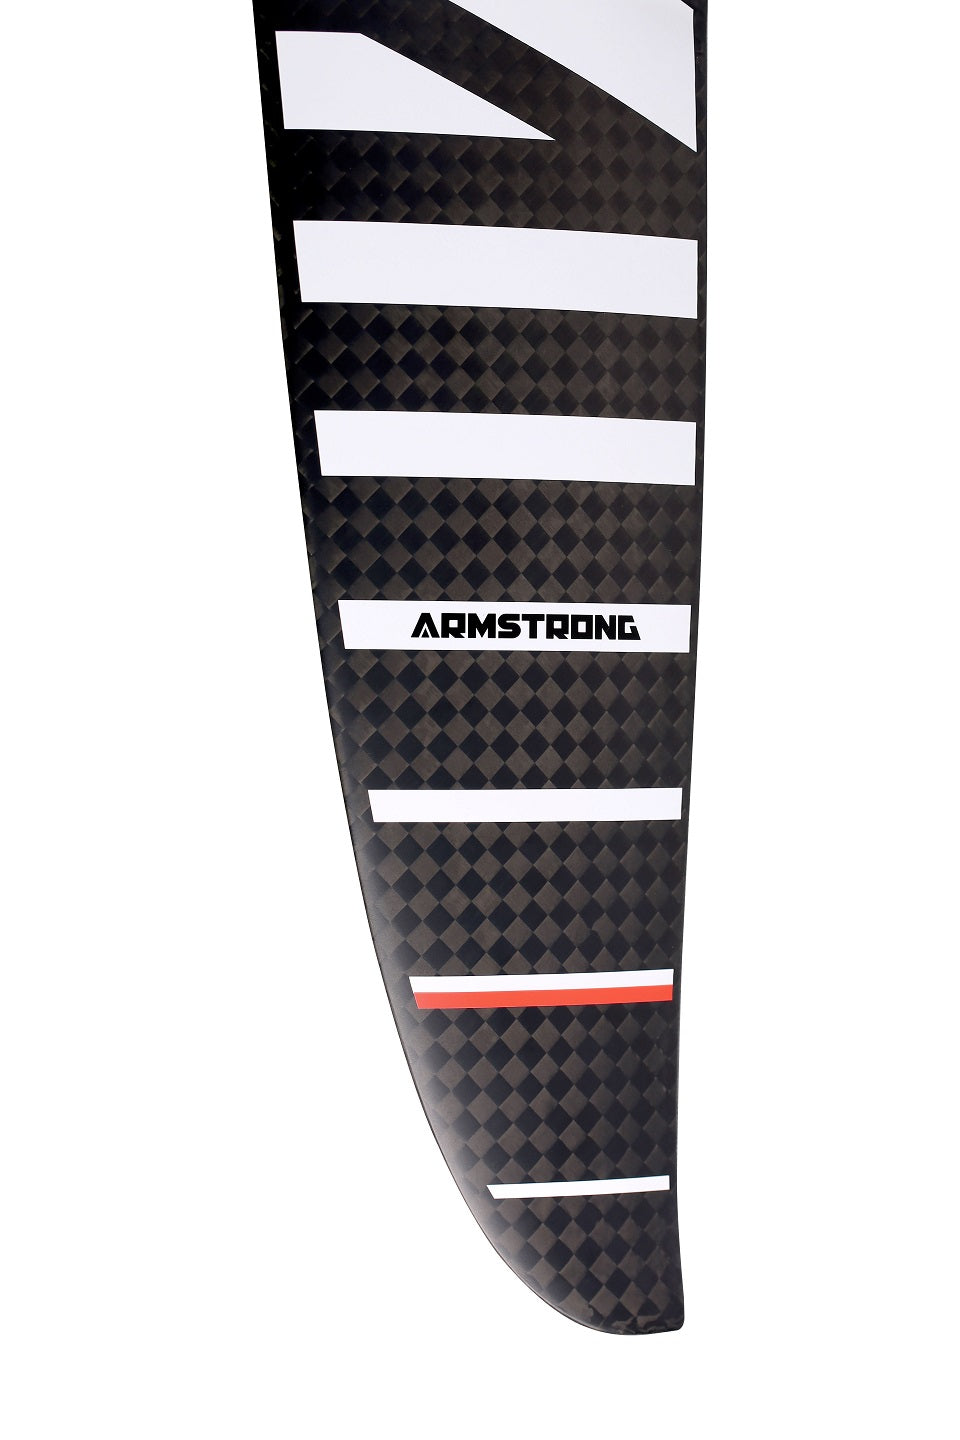 Armstrong MA800